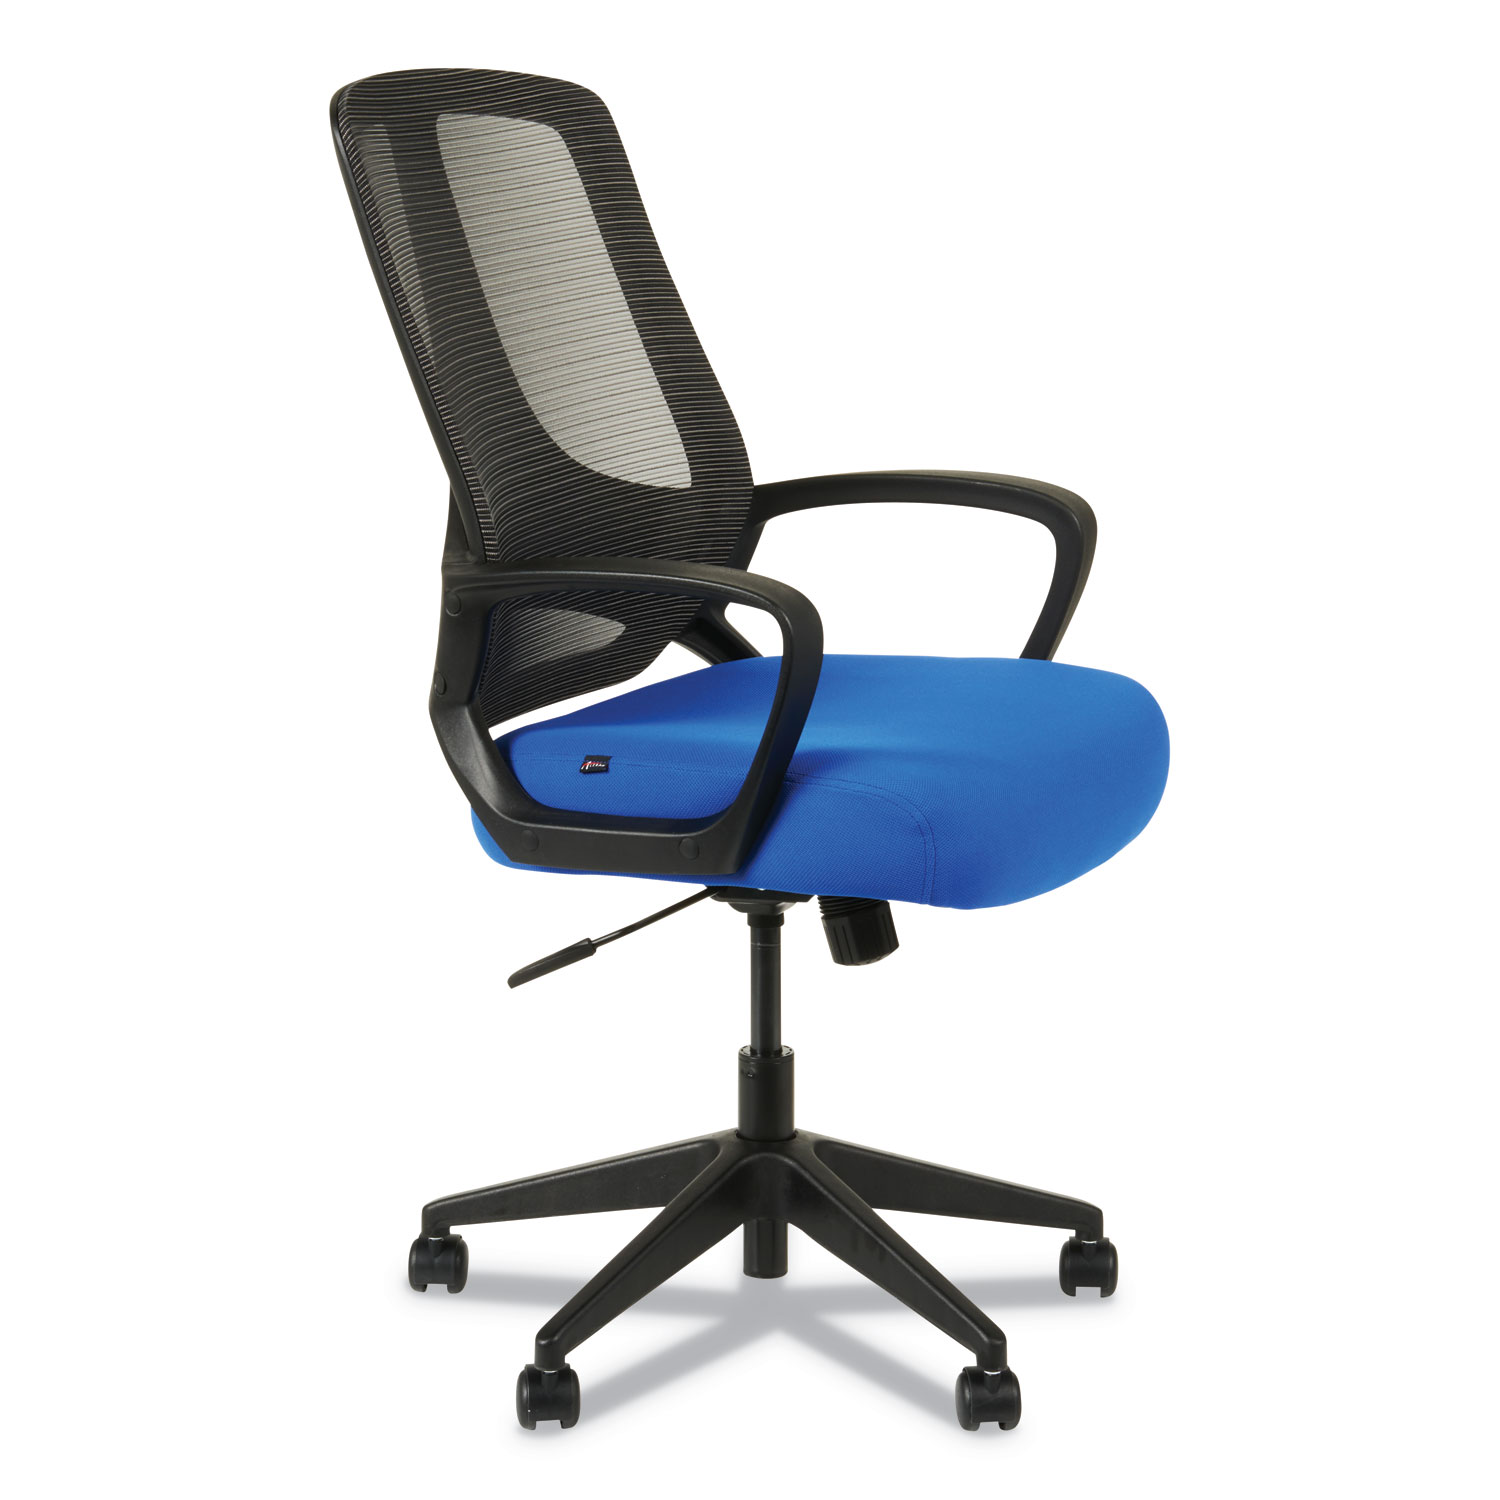  Alera ALEMB4728 Alera MB Series Mesh Mid-Back Office Chair, Supports up to 275 lbs., Blue Seat/Black Back, Black Base (ALEMB4728) 